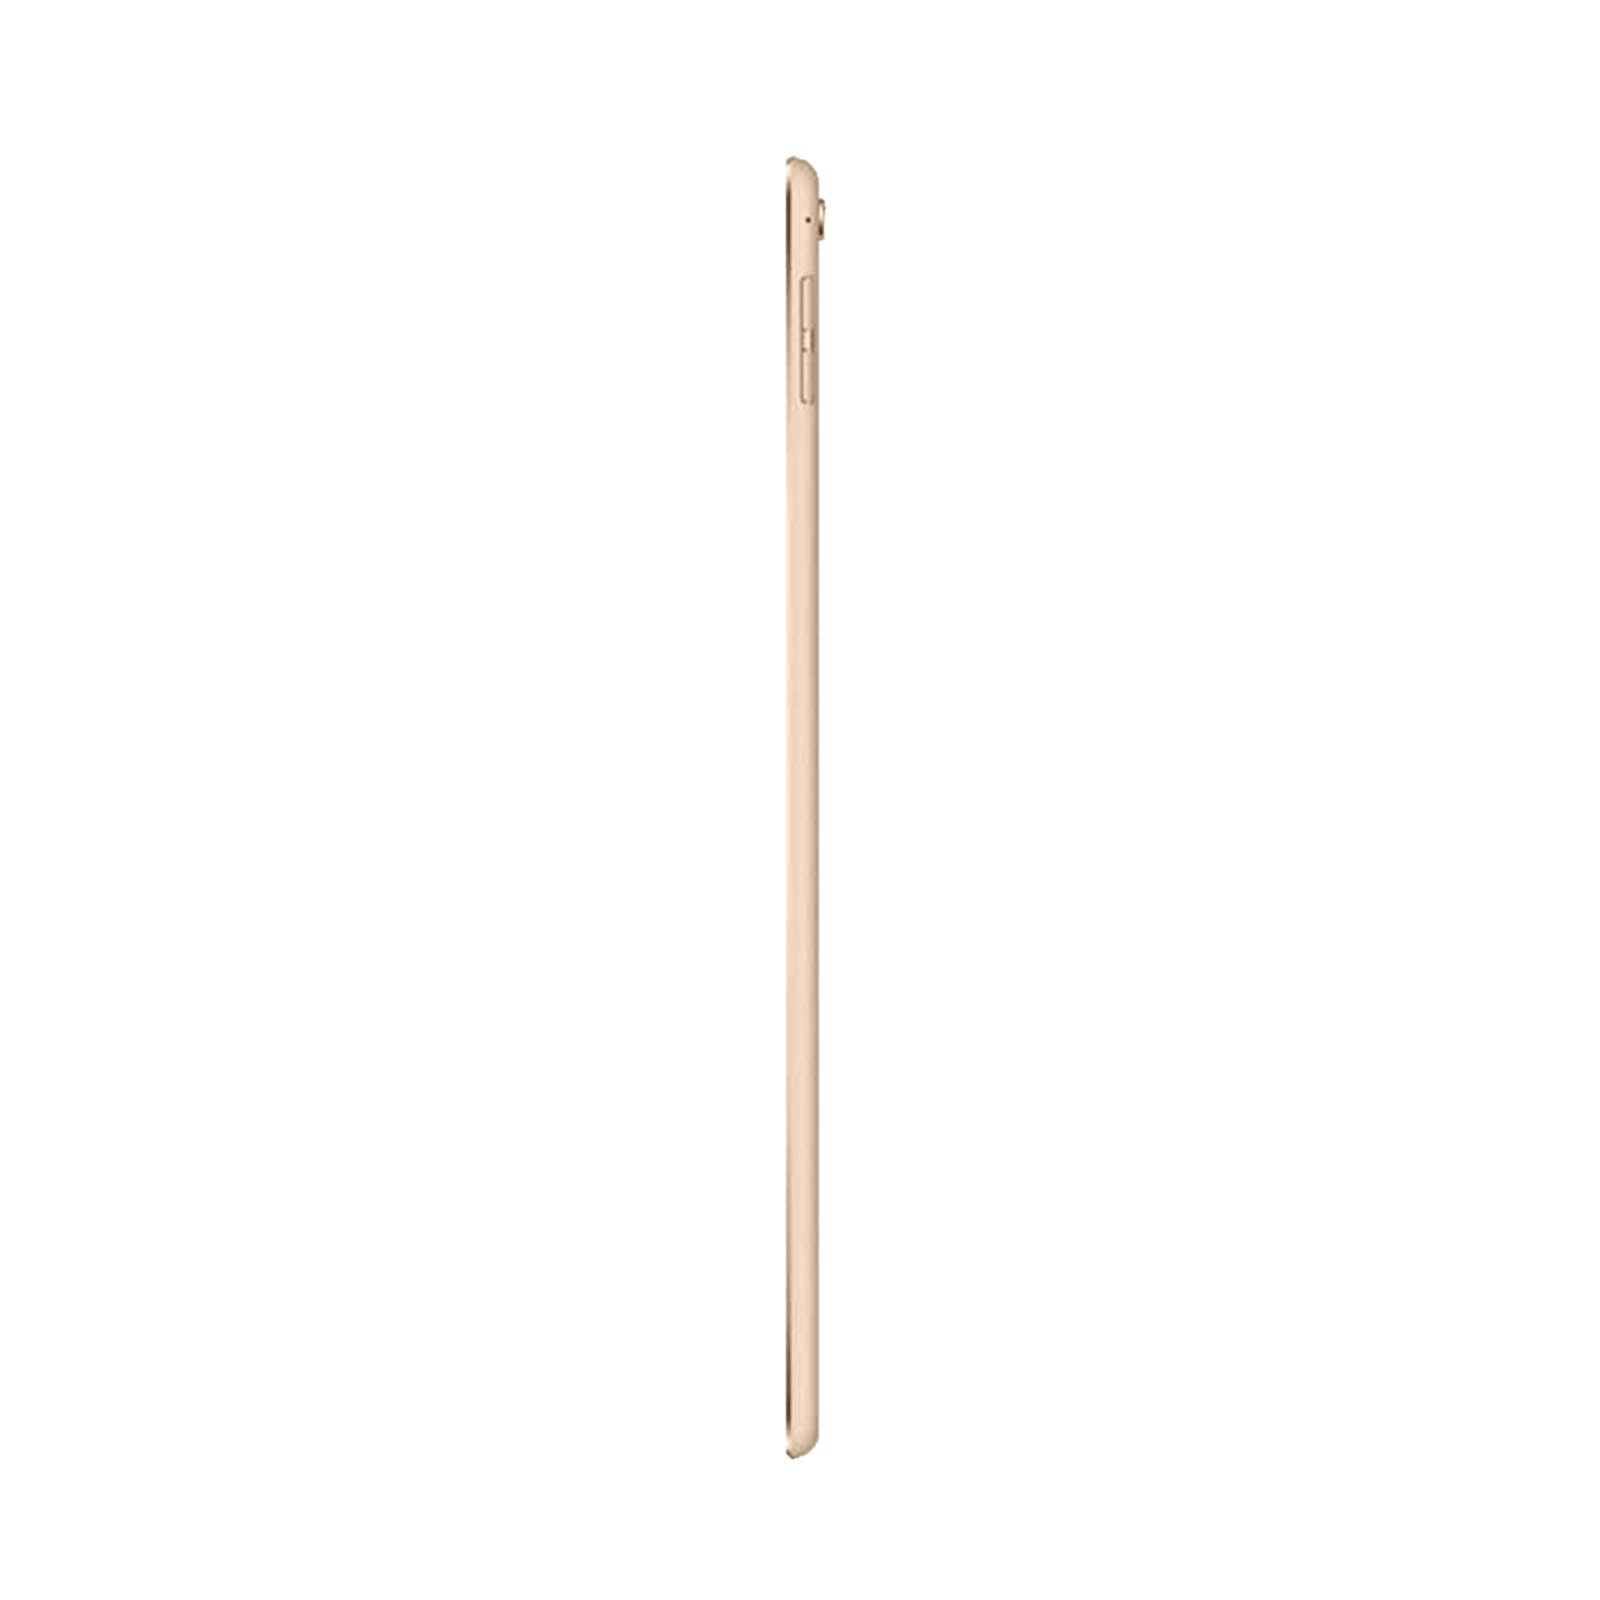 Apple iPad Pro 9.7" 256GB Gold Pristine - WiFi